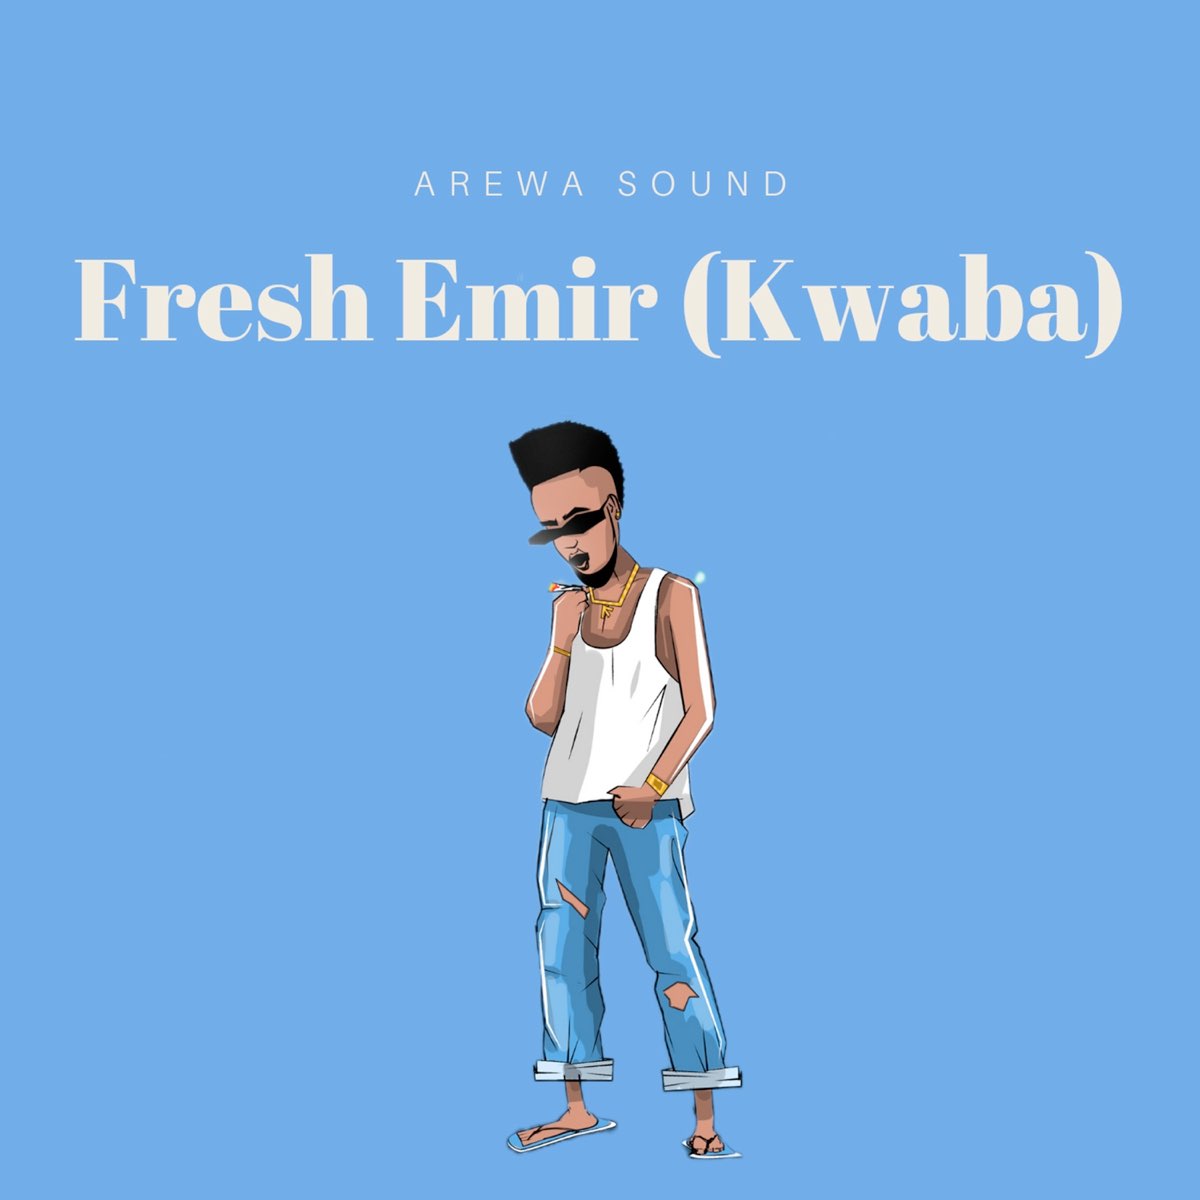 Fresh Emir (Kwaba) - Single by Arewa Sound on Apple Music